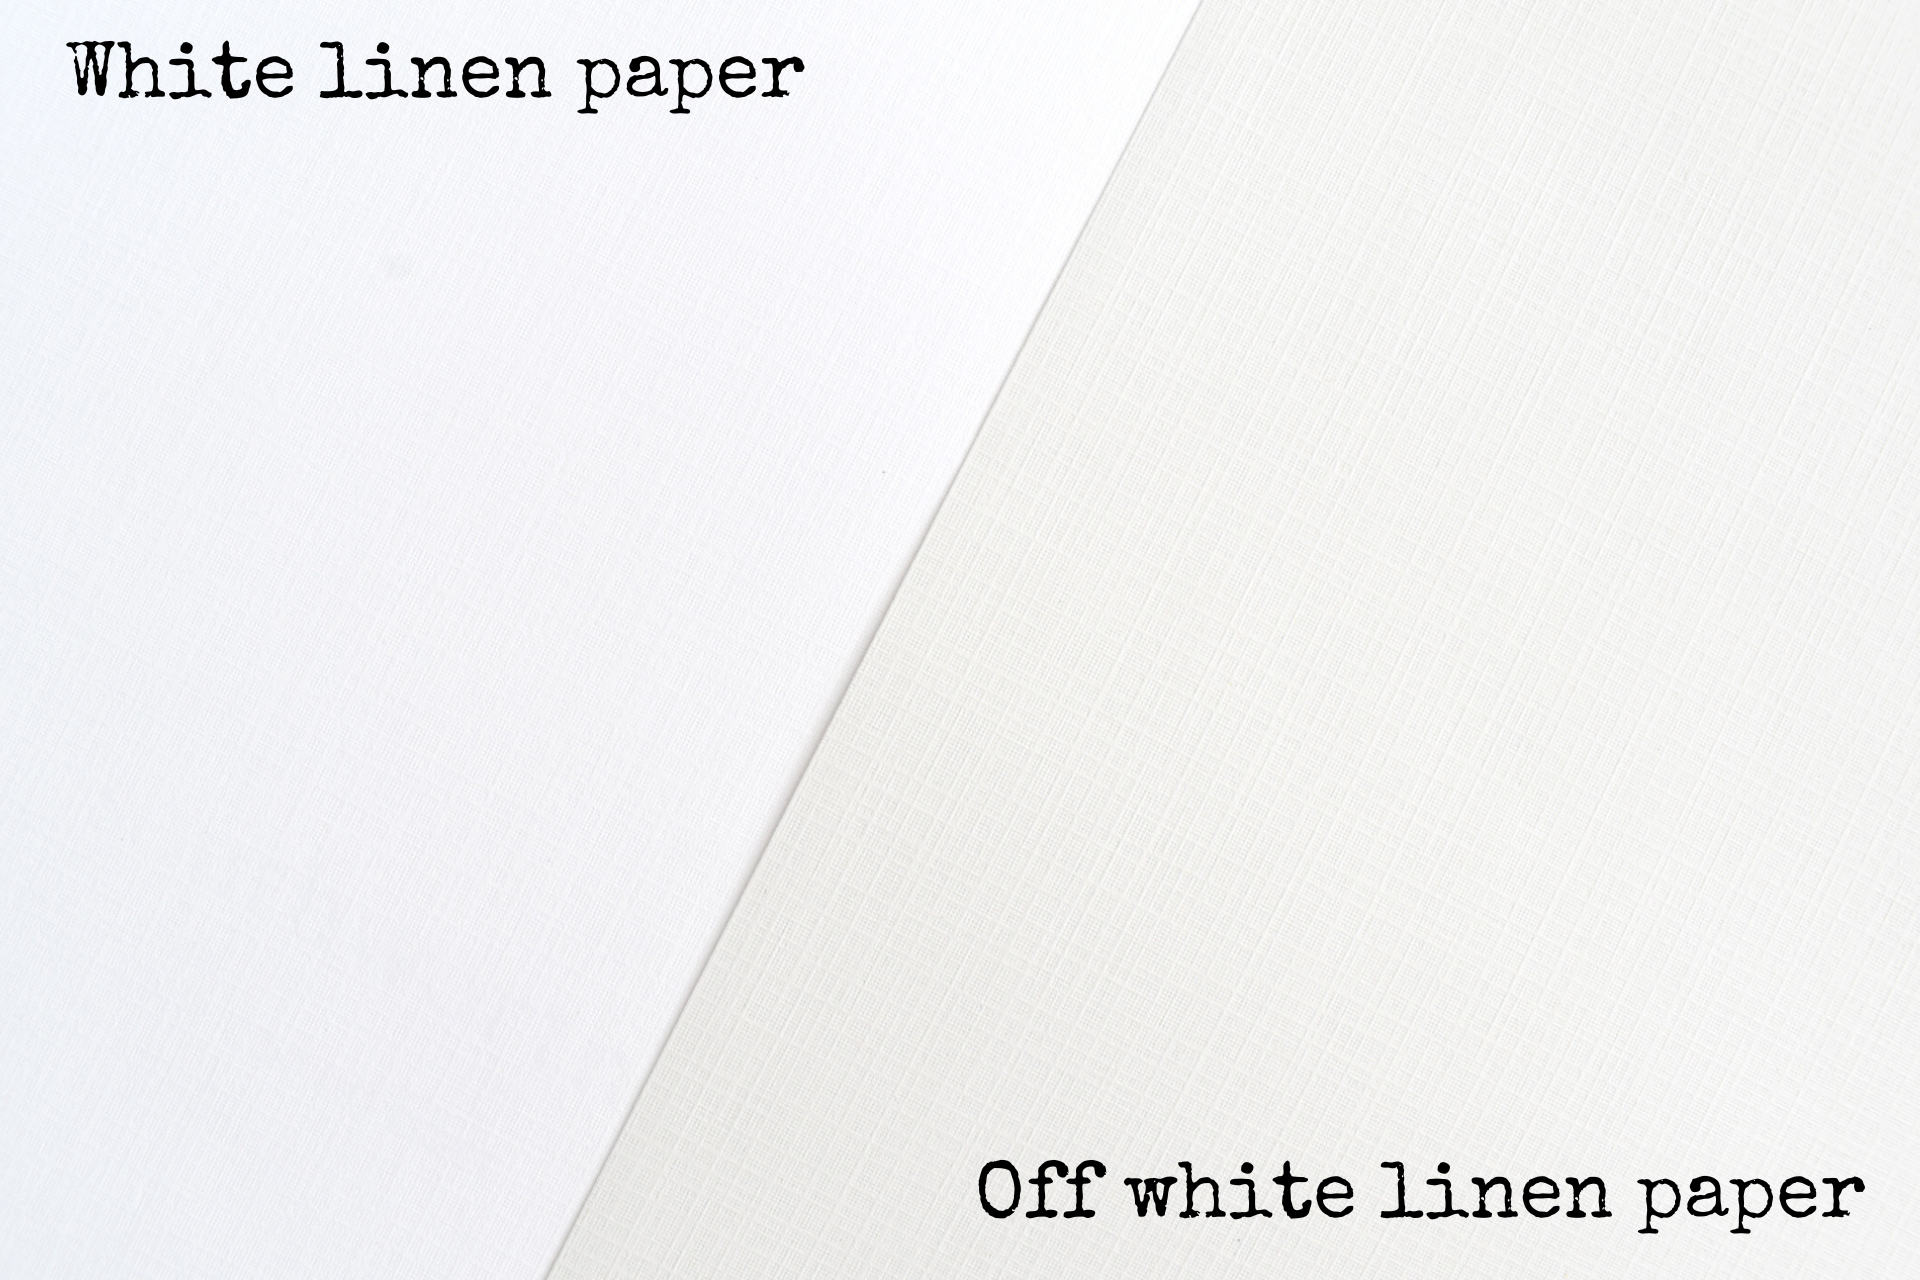 Southworth Linen Typing Paper - Premium White